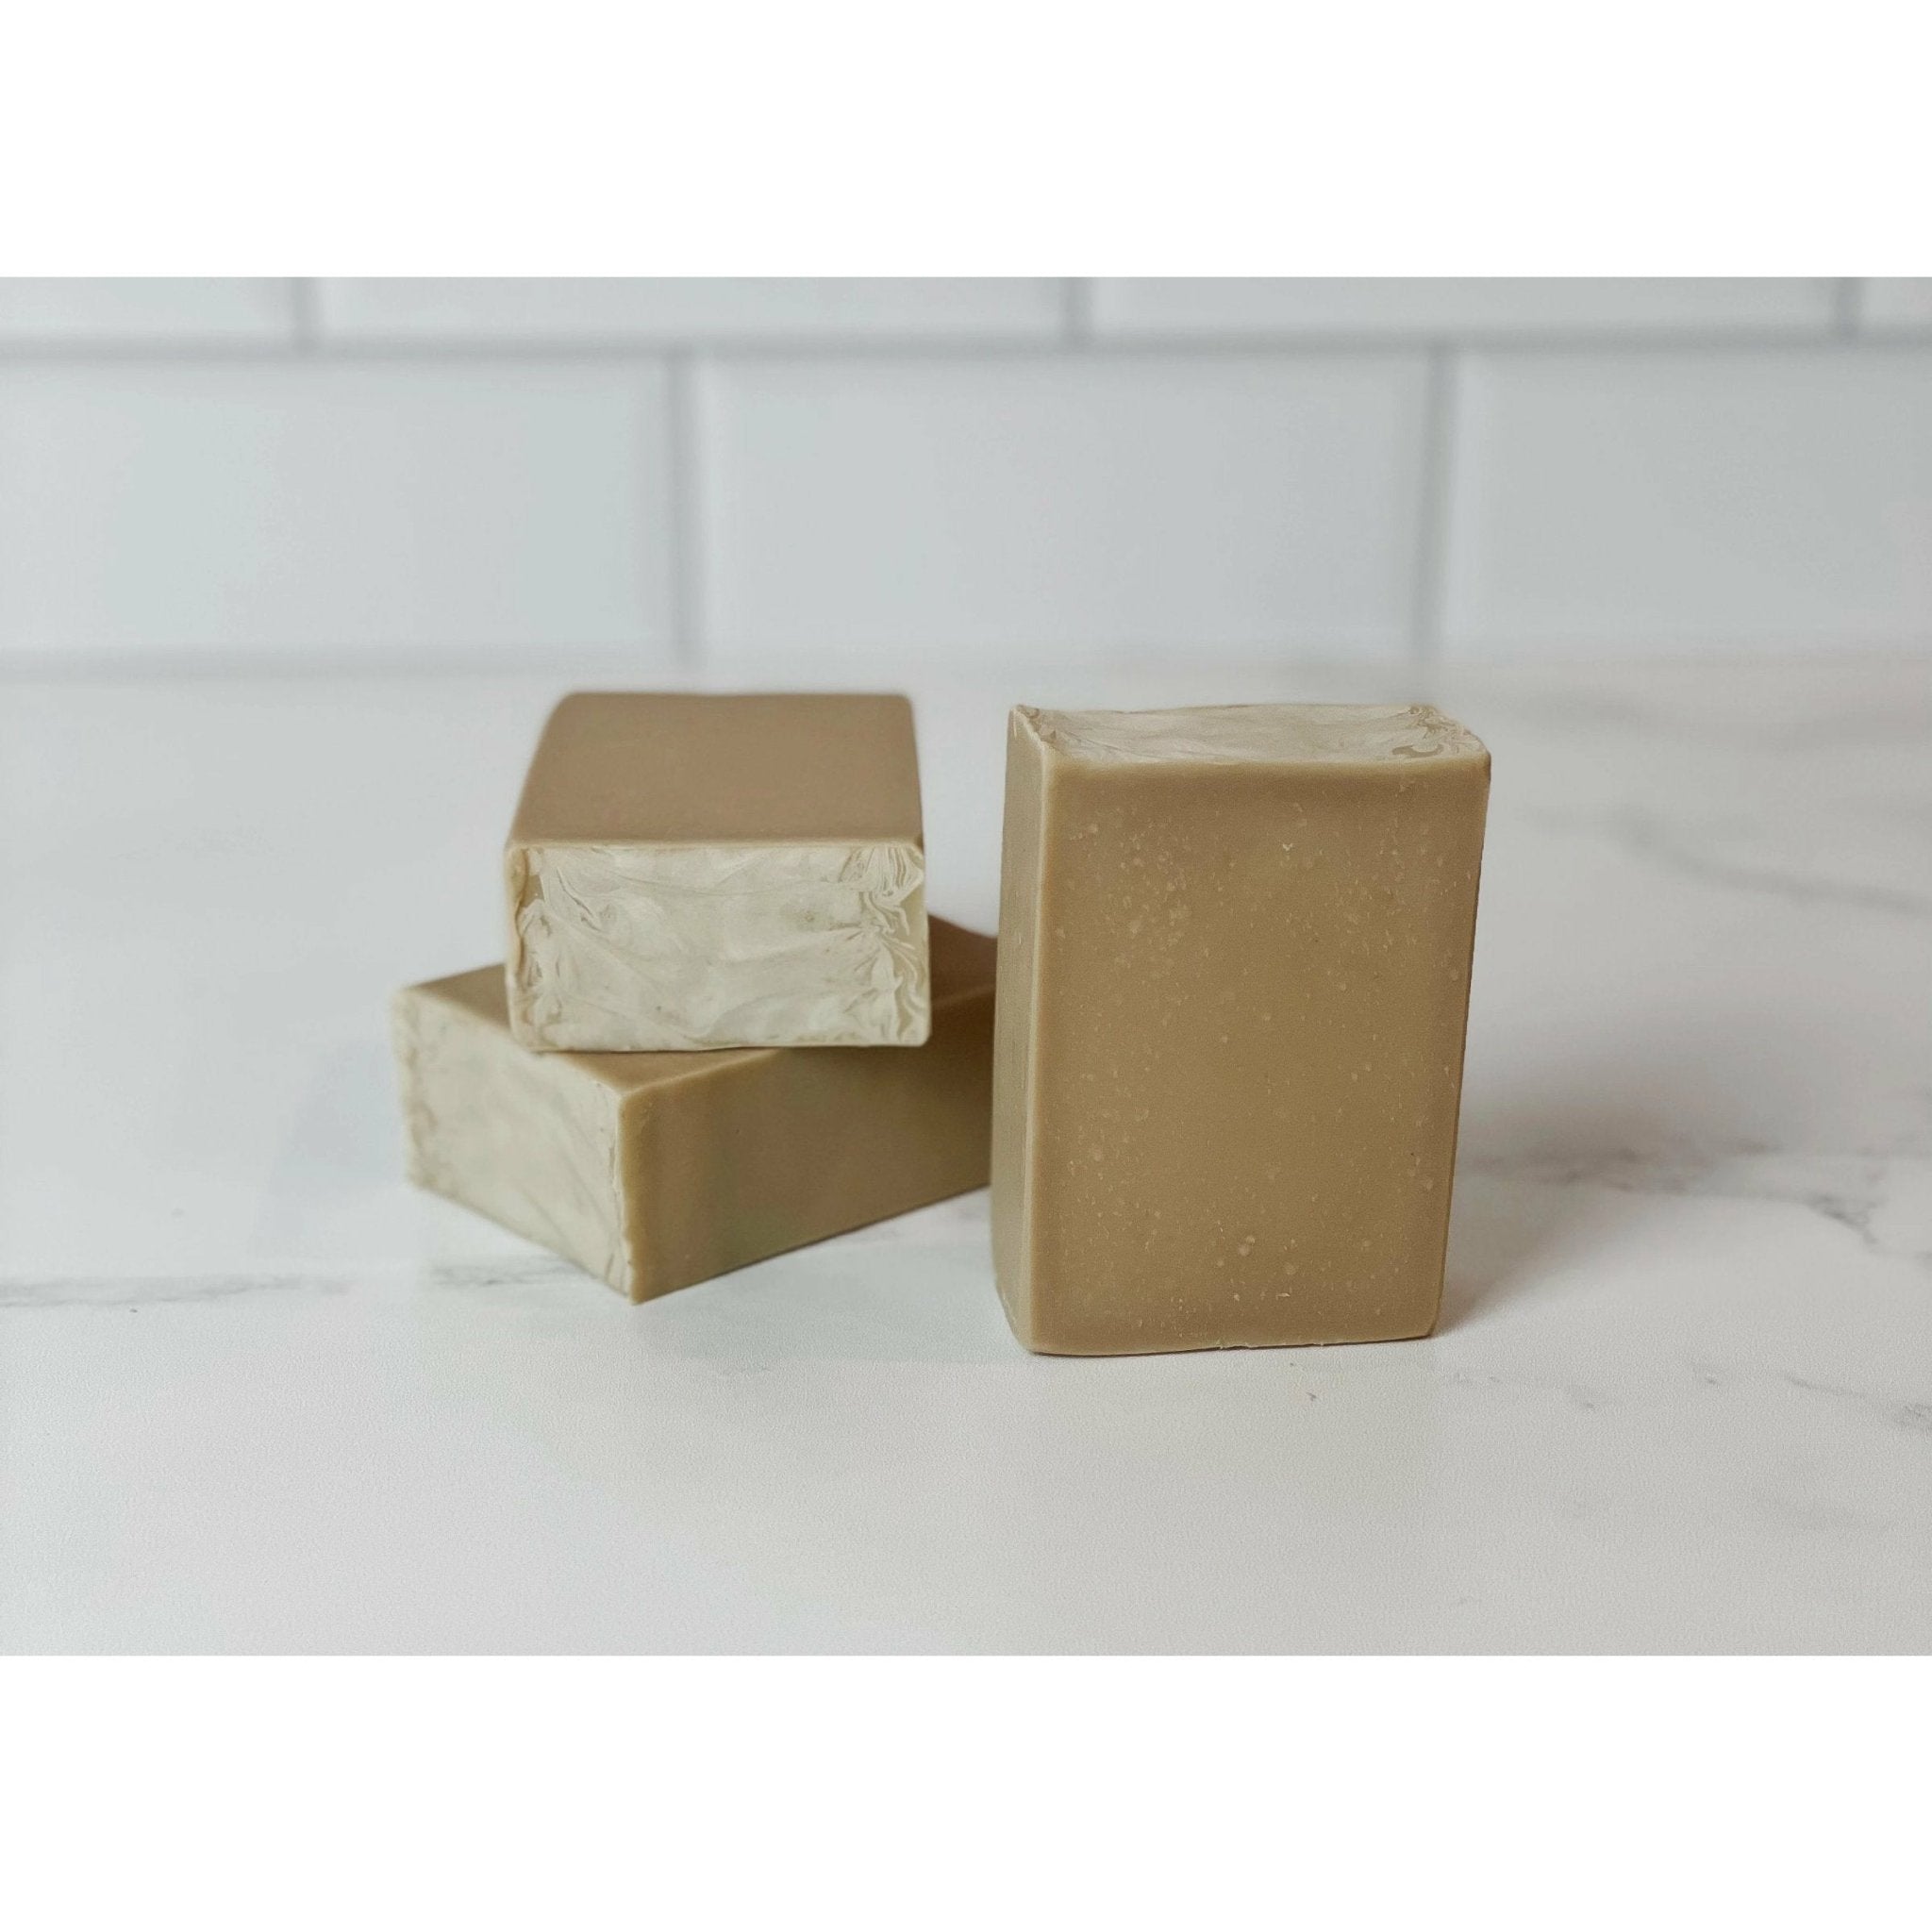 Oatmeal Milk & Honey | Nut & Palm Oil Free Soap | Handmade Soap - Celtic Clan Soapery LLC